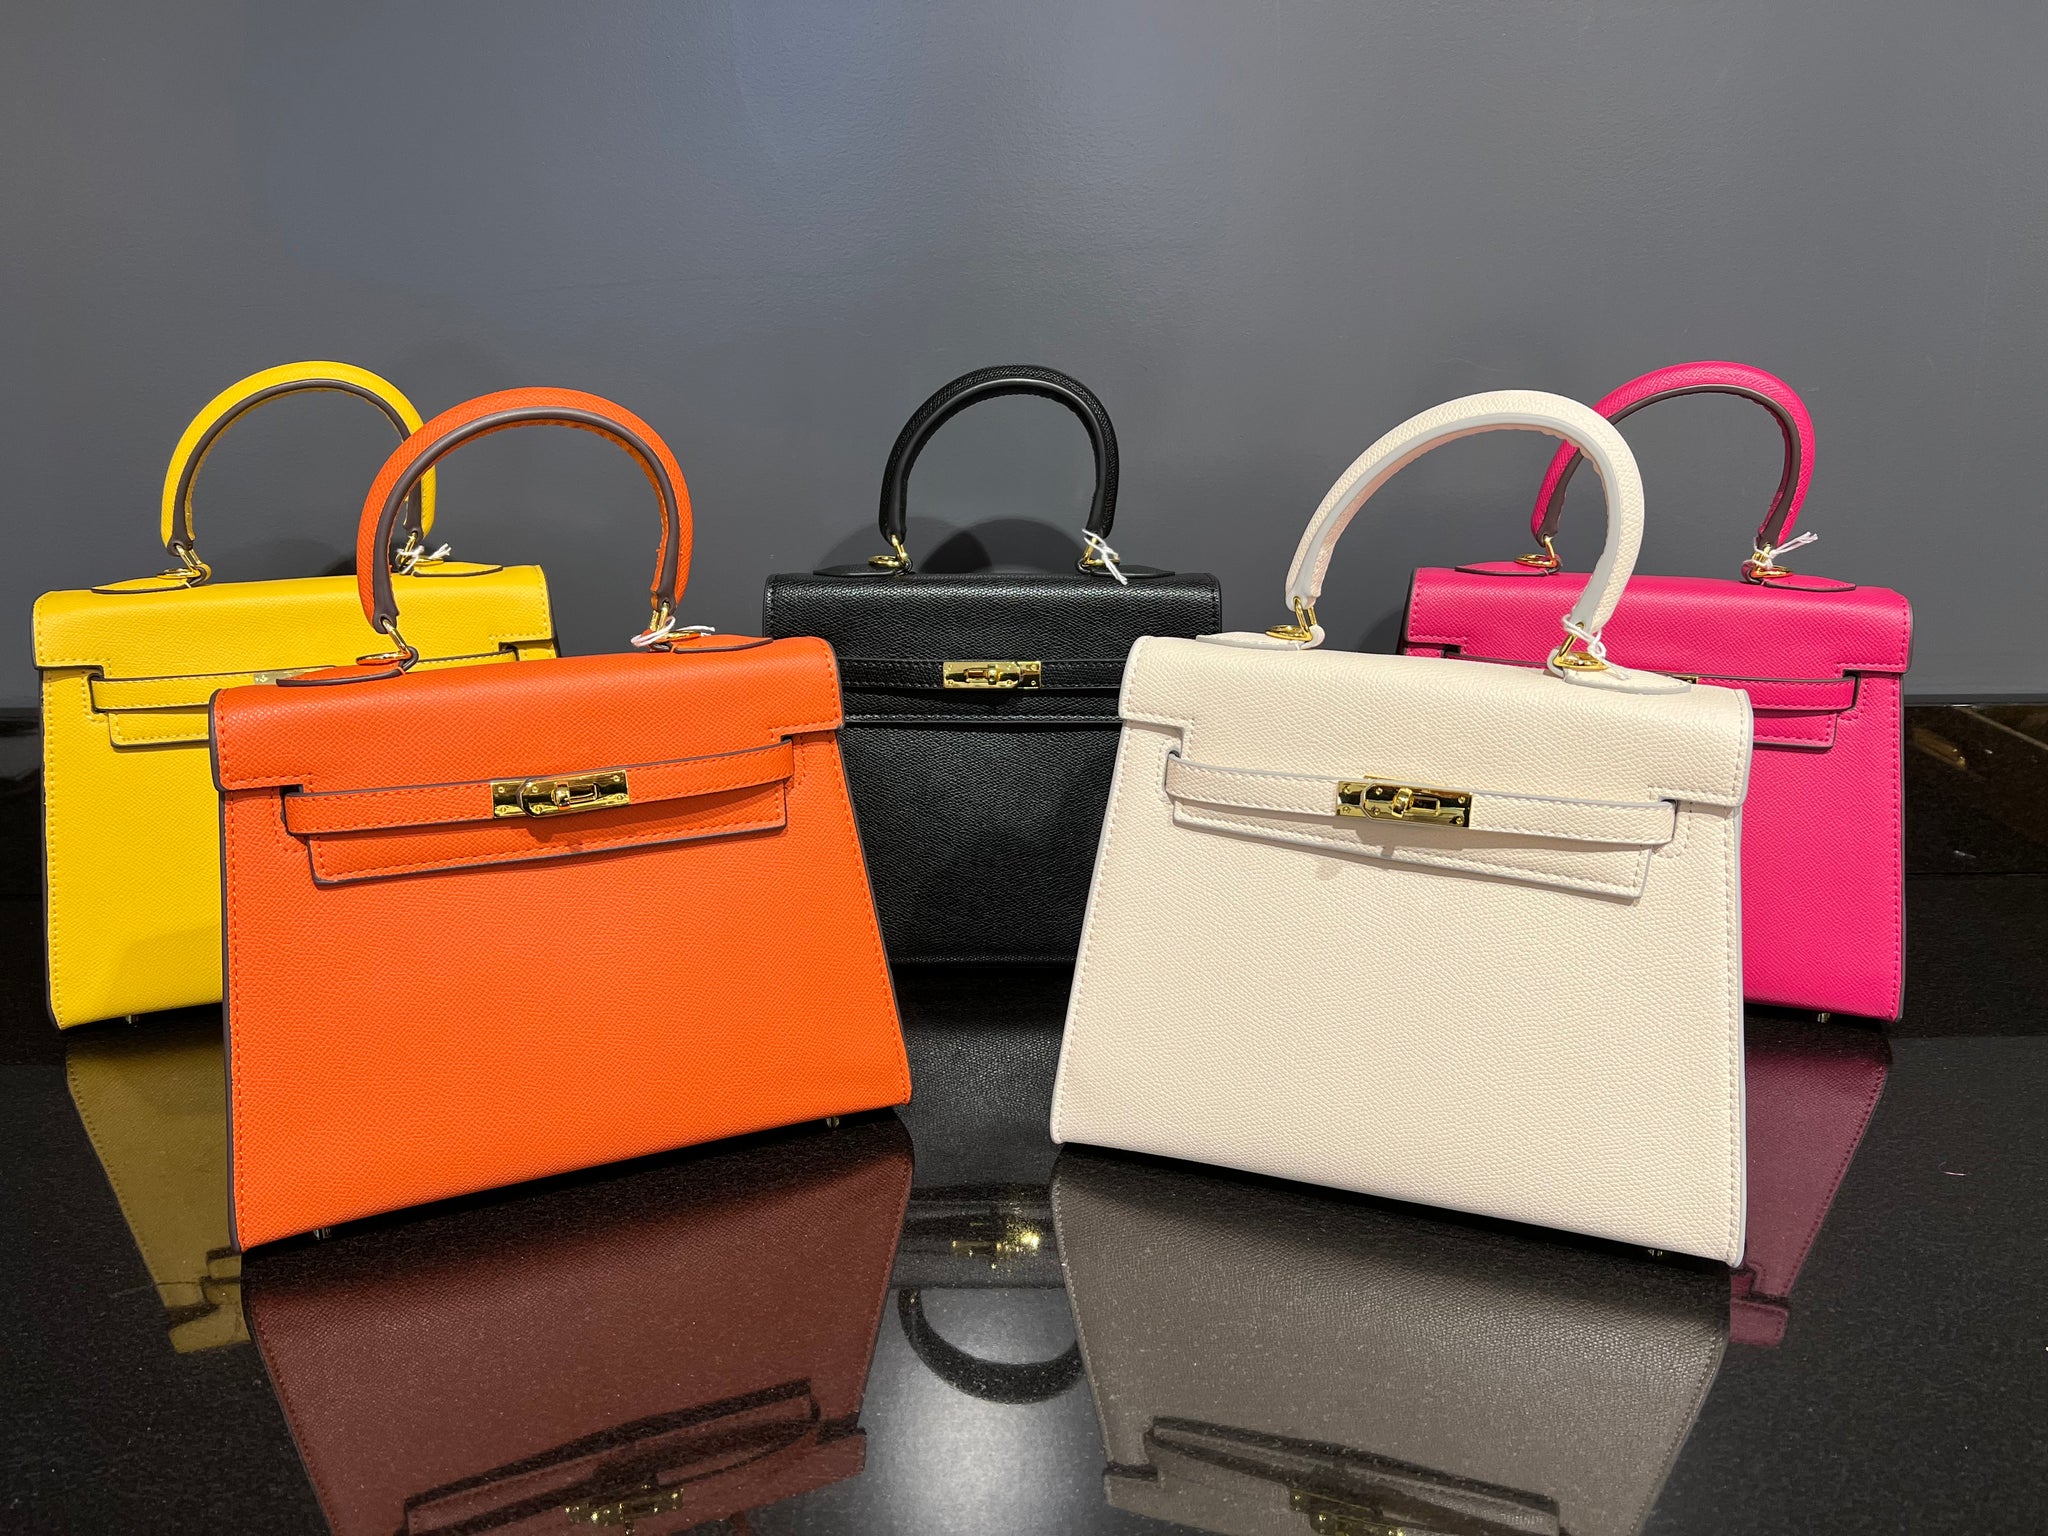 Vegan Leather Birkin-Inspired Handbag with Scarf – The DLM Shop